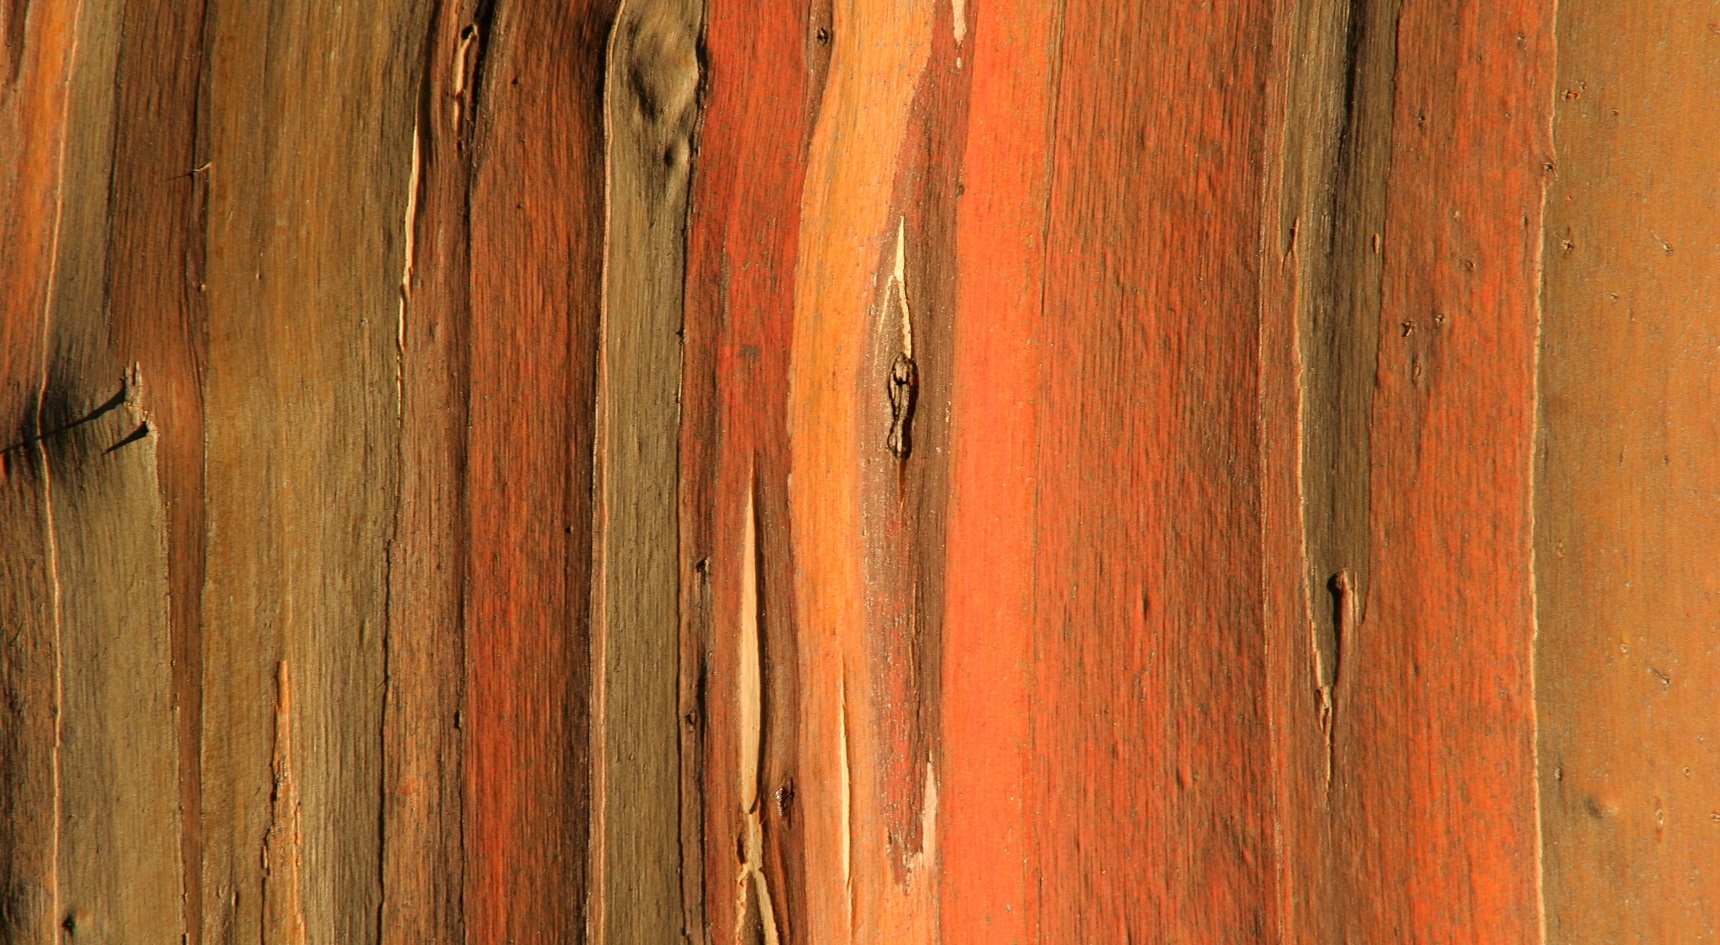 Untreated eucalyptus wood.